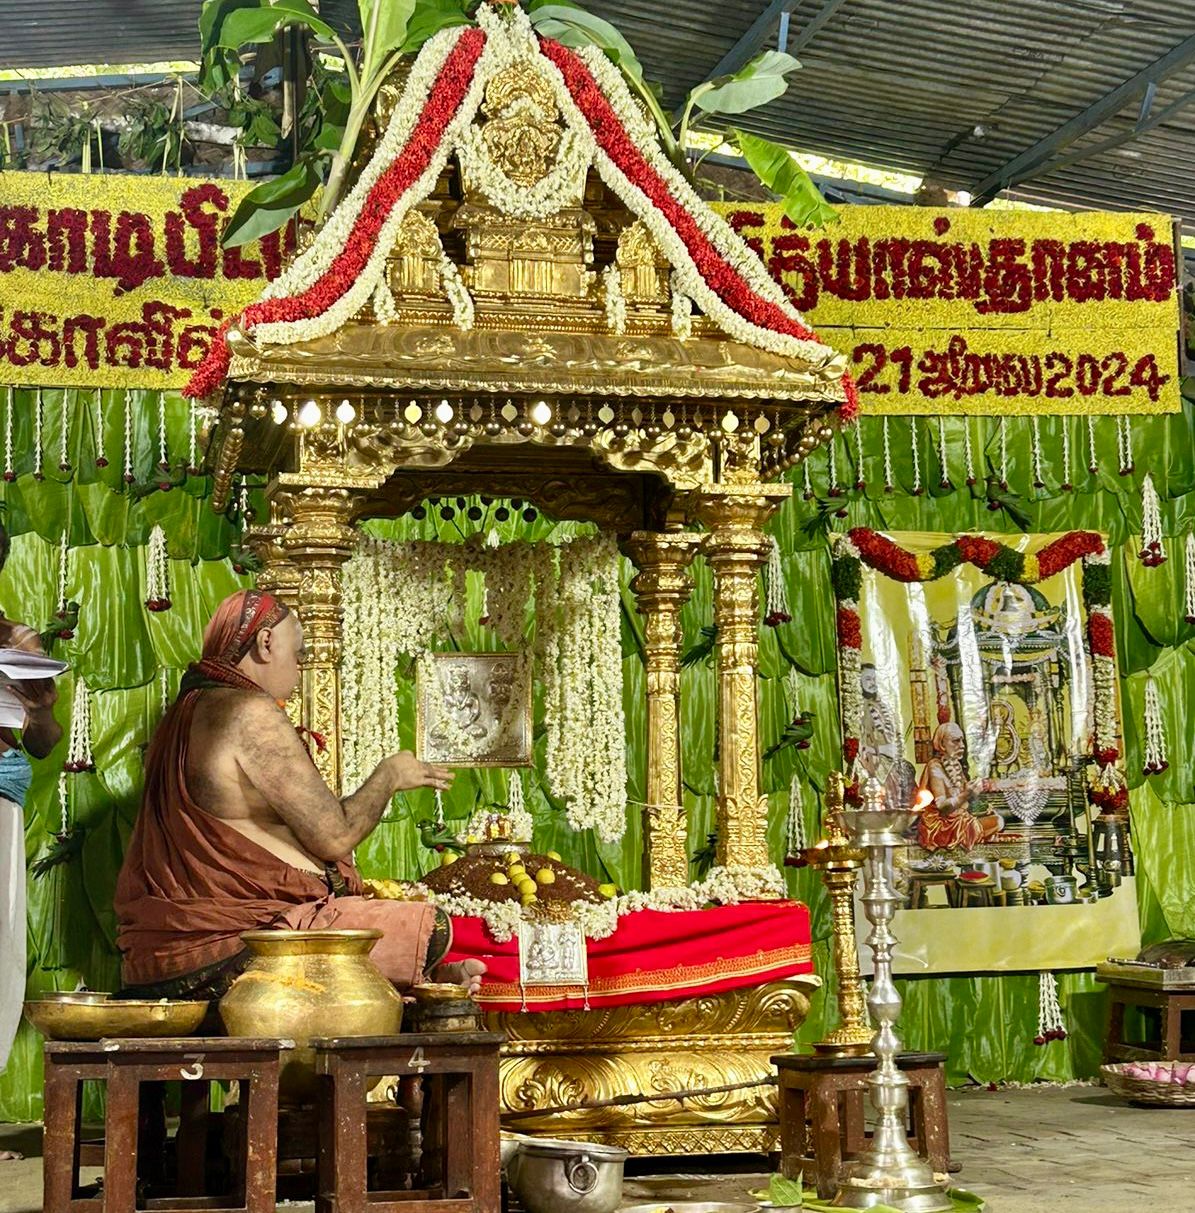 Krodhi Samvatsaram Vyasa Puja commences at Tiruvanaikovil